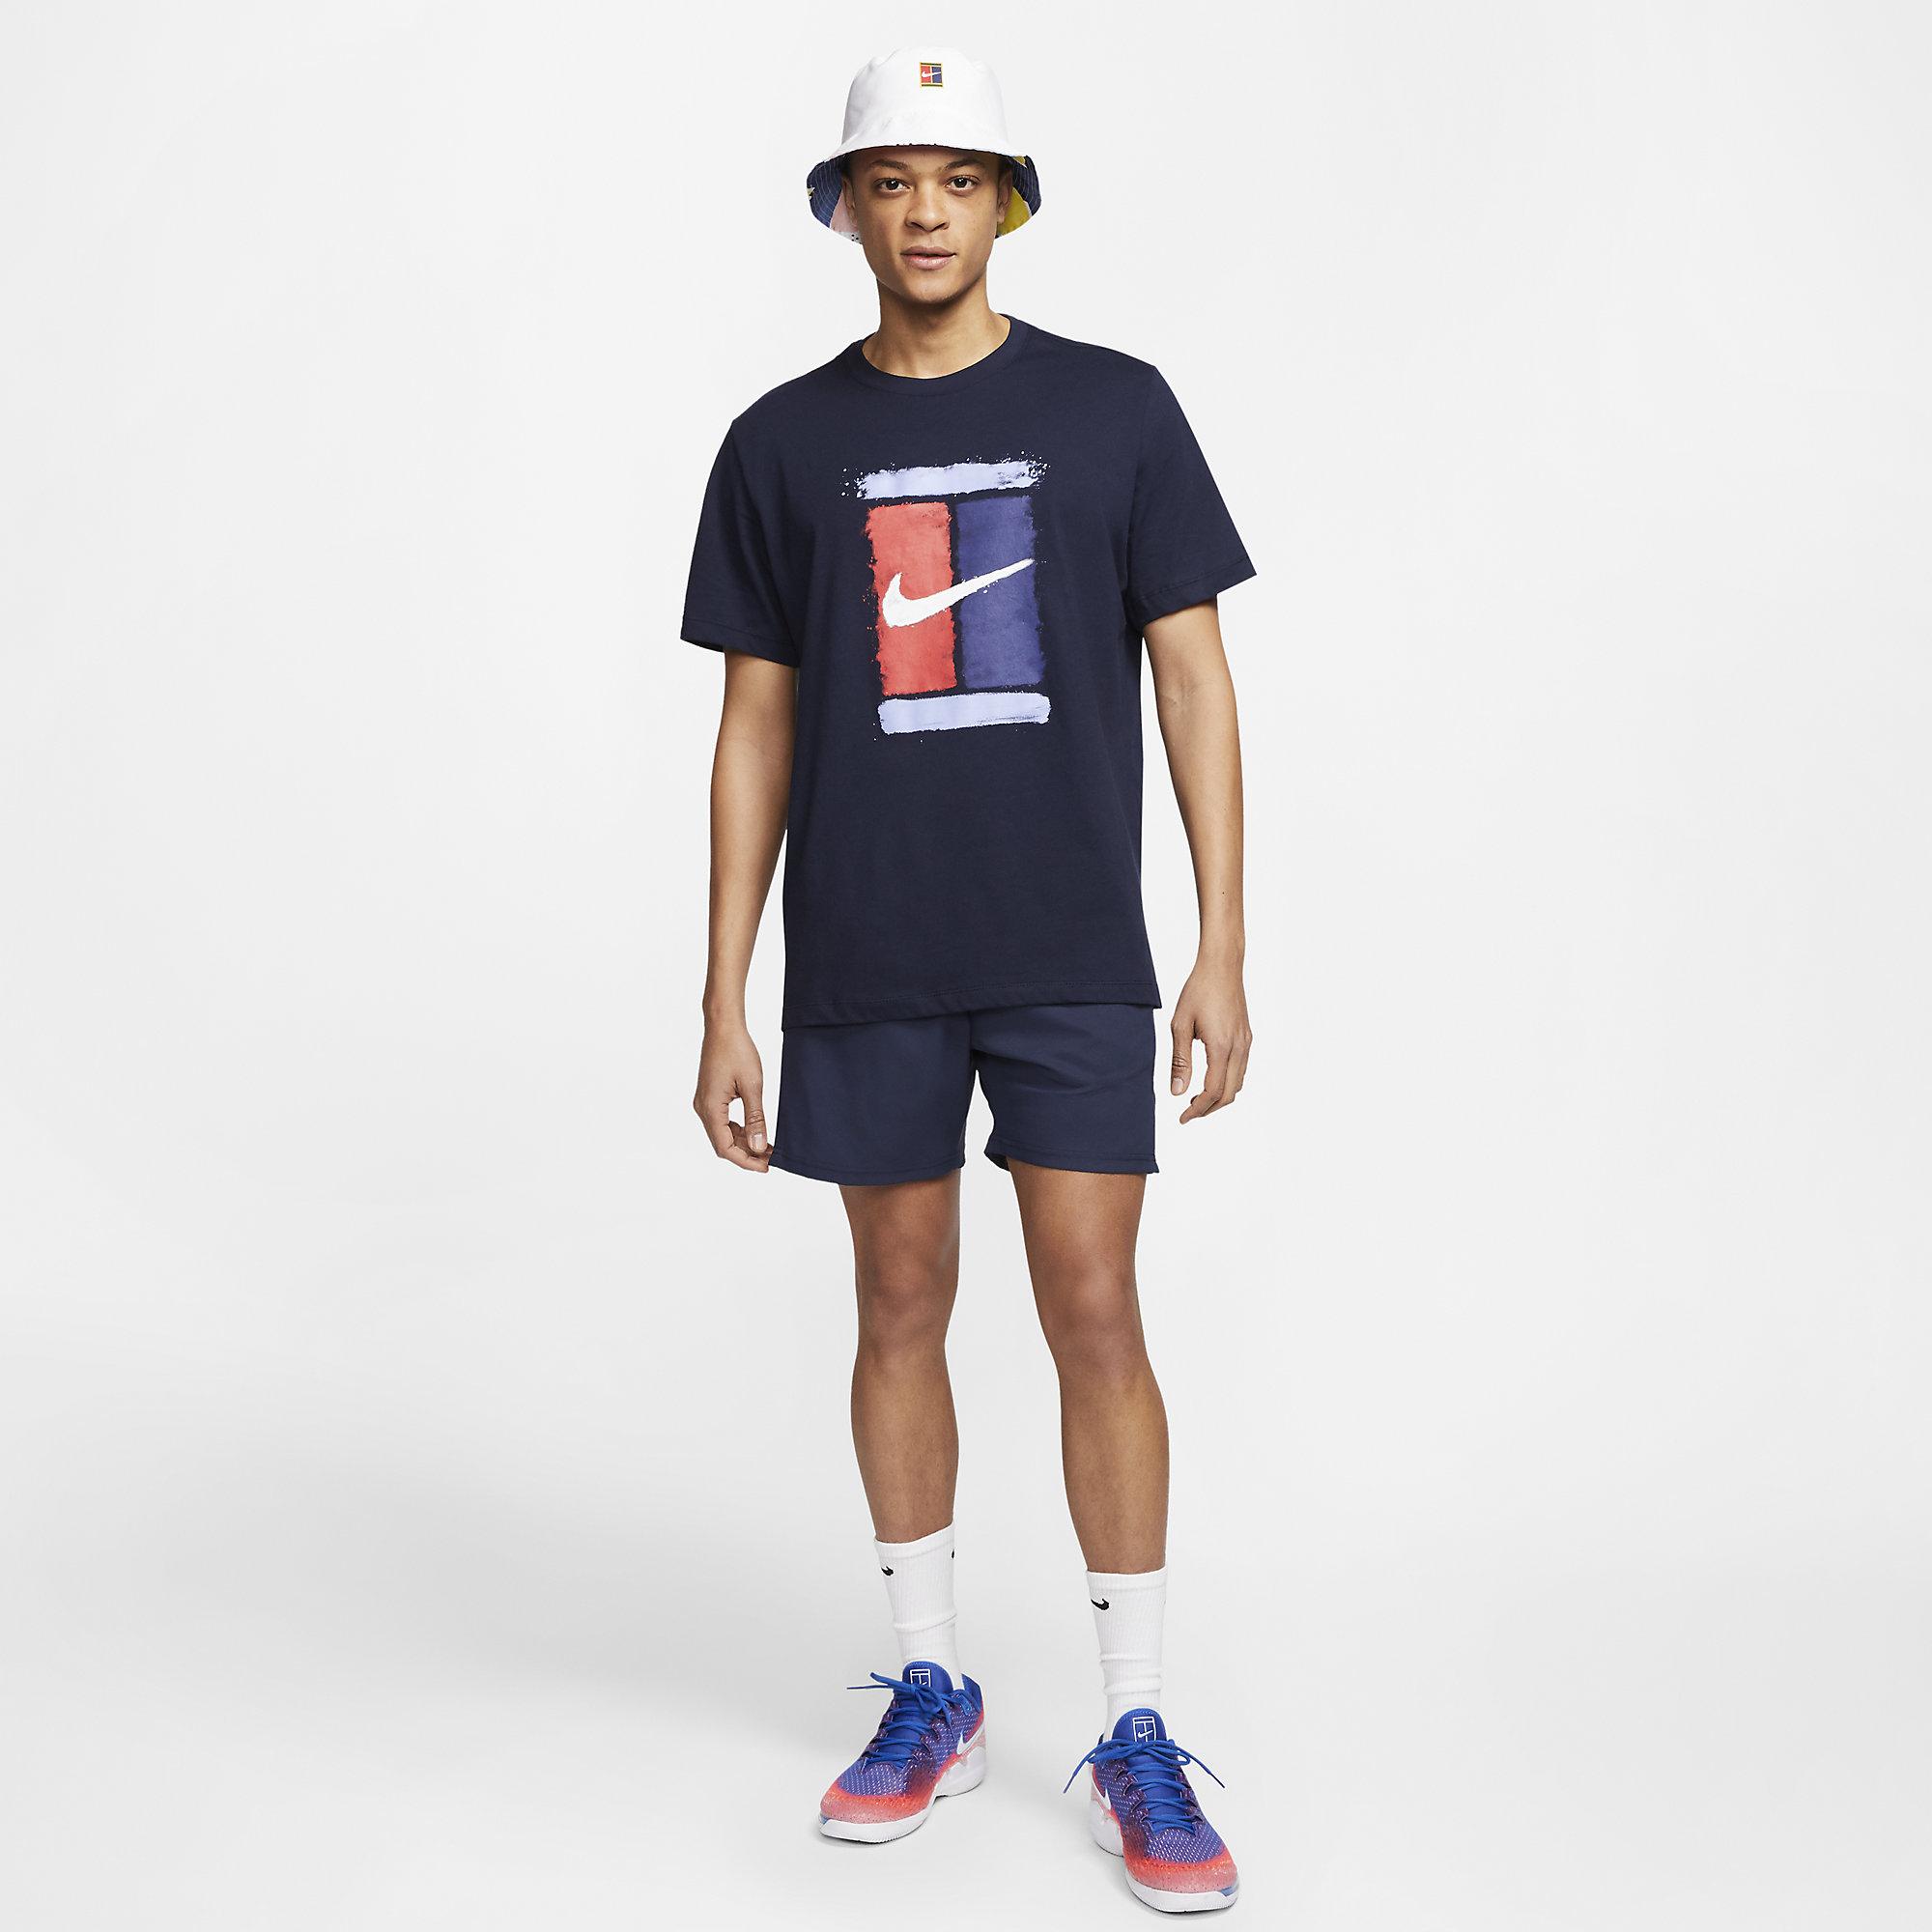 Nike Mens Court Graphic Tennis T-Shirt - Obsidian - Tennisnuts.com